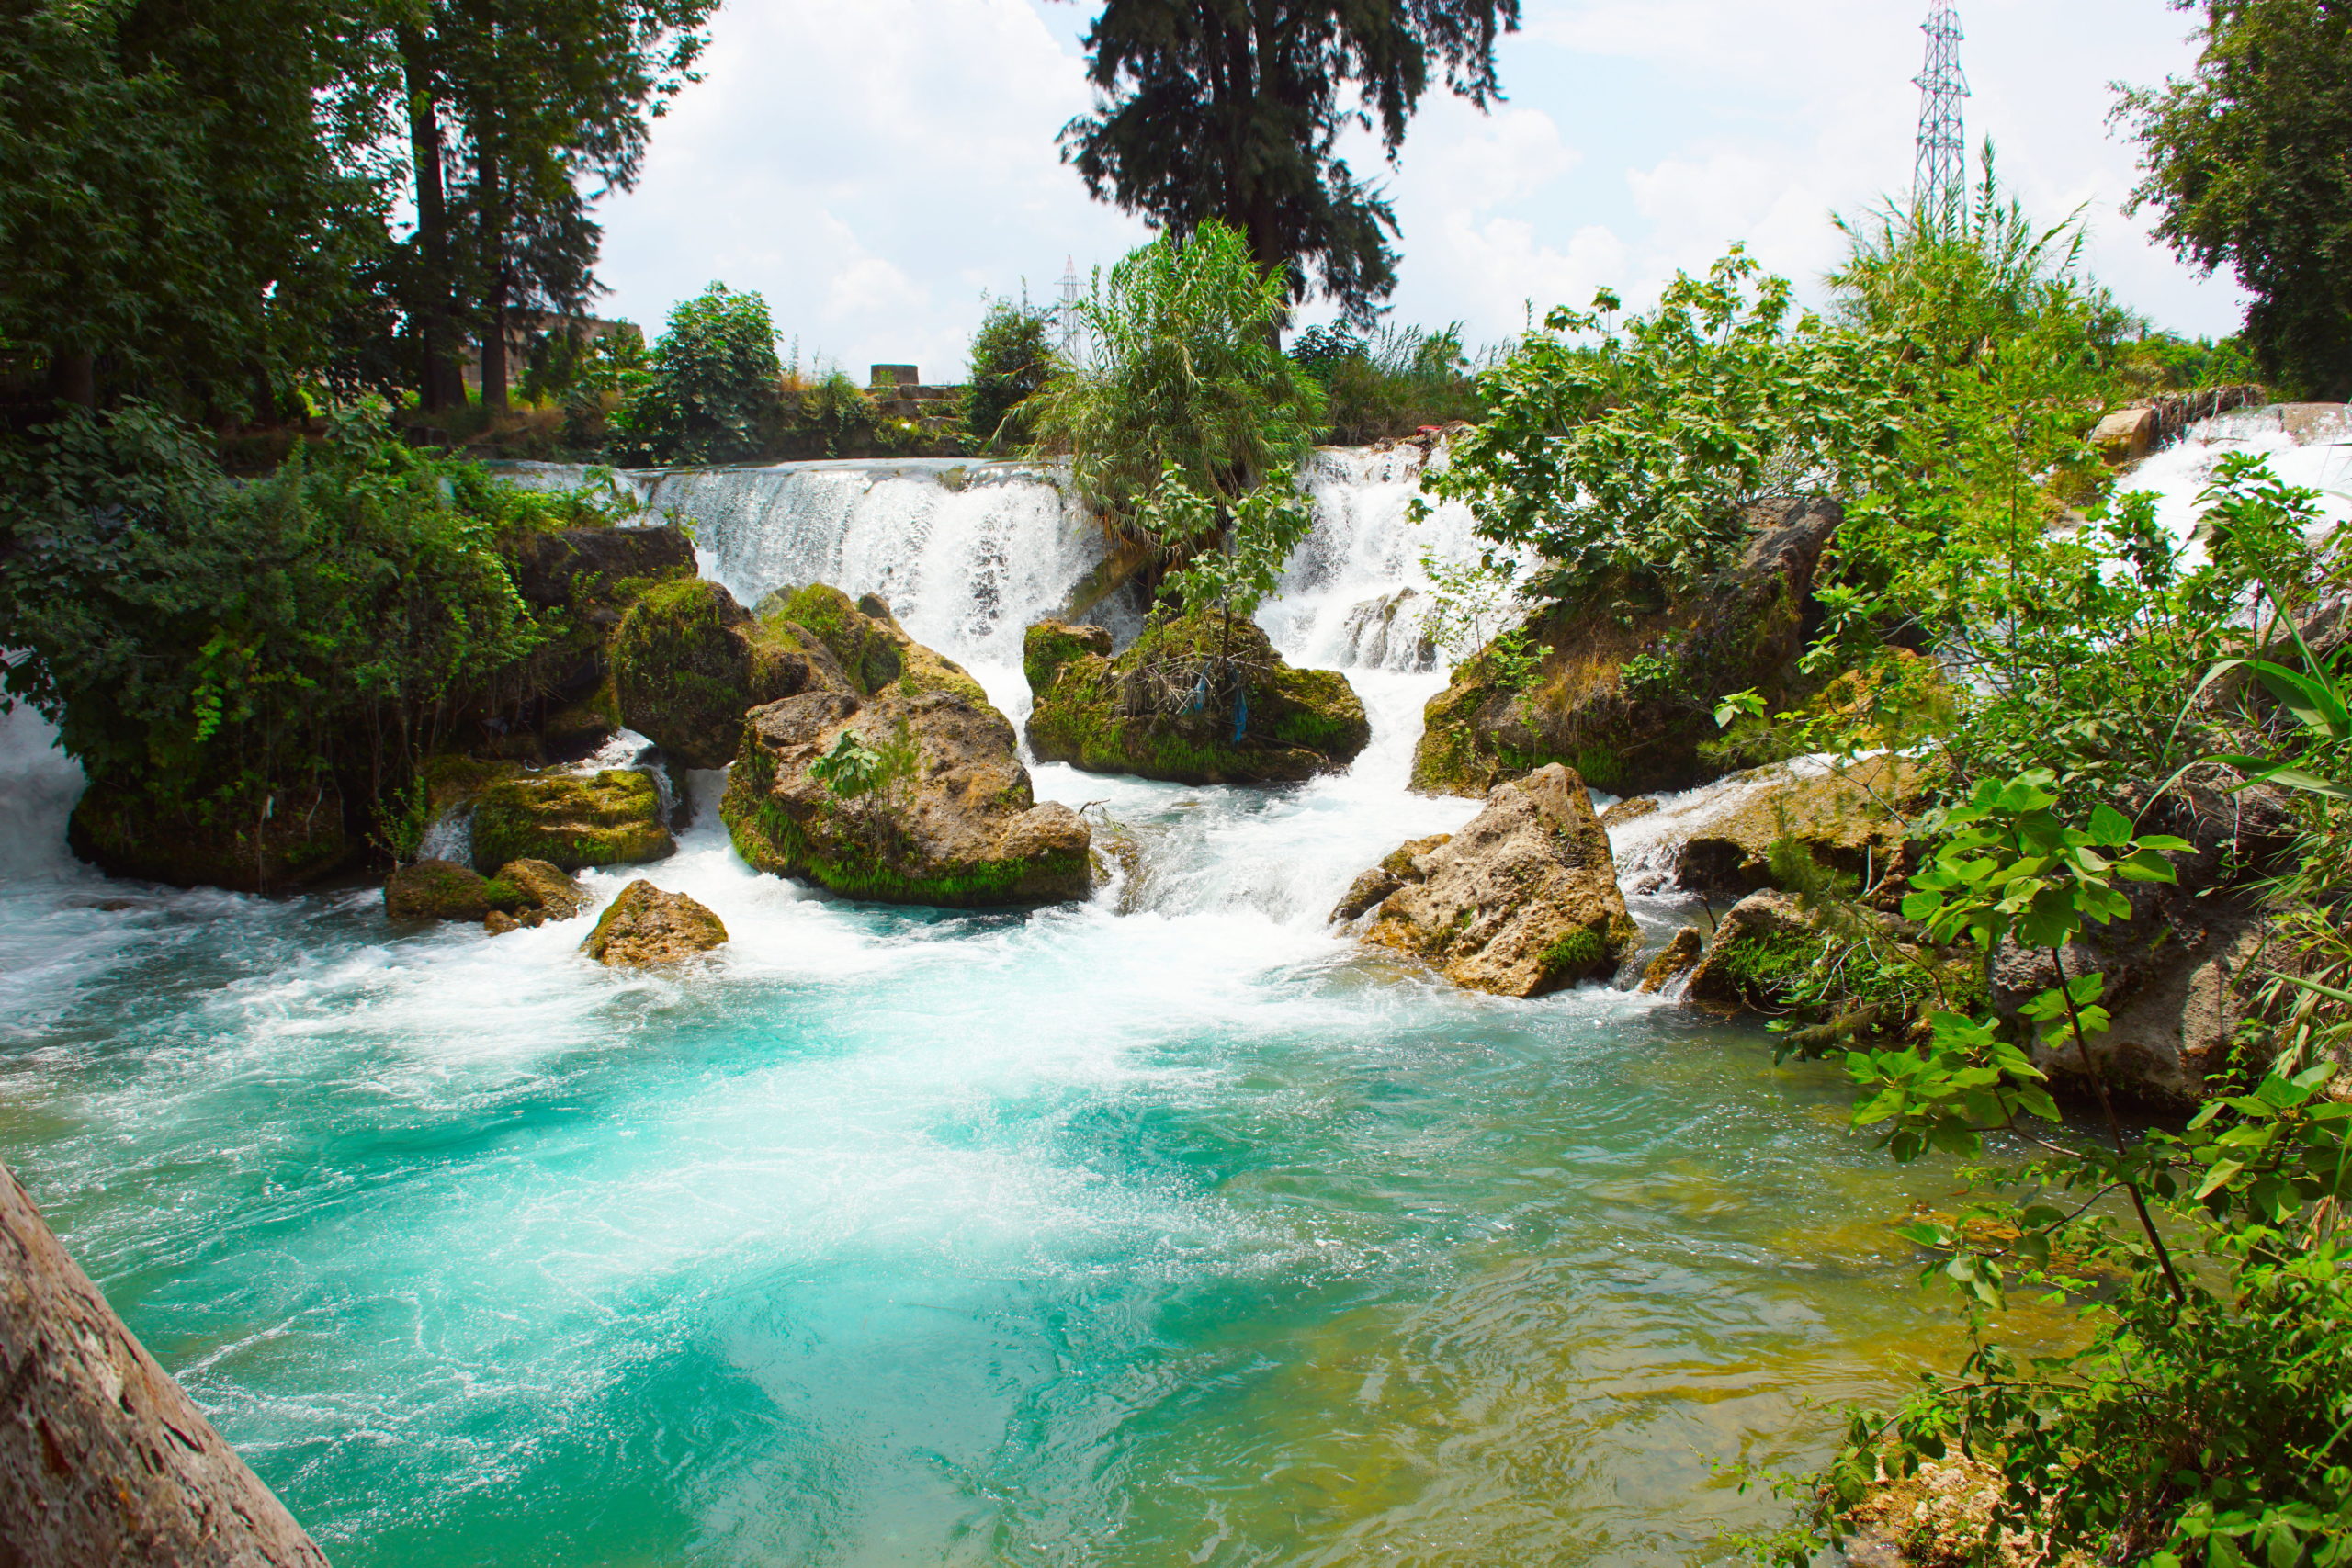 One of the many Berdan waterfalls.